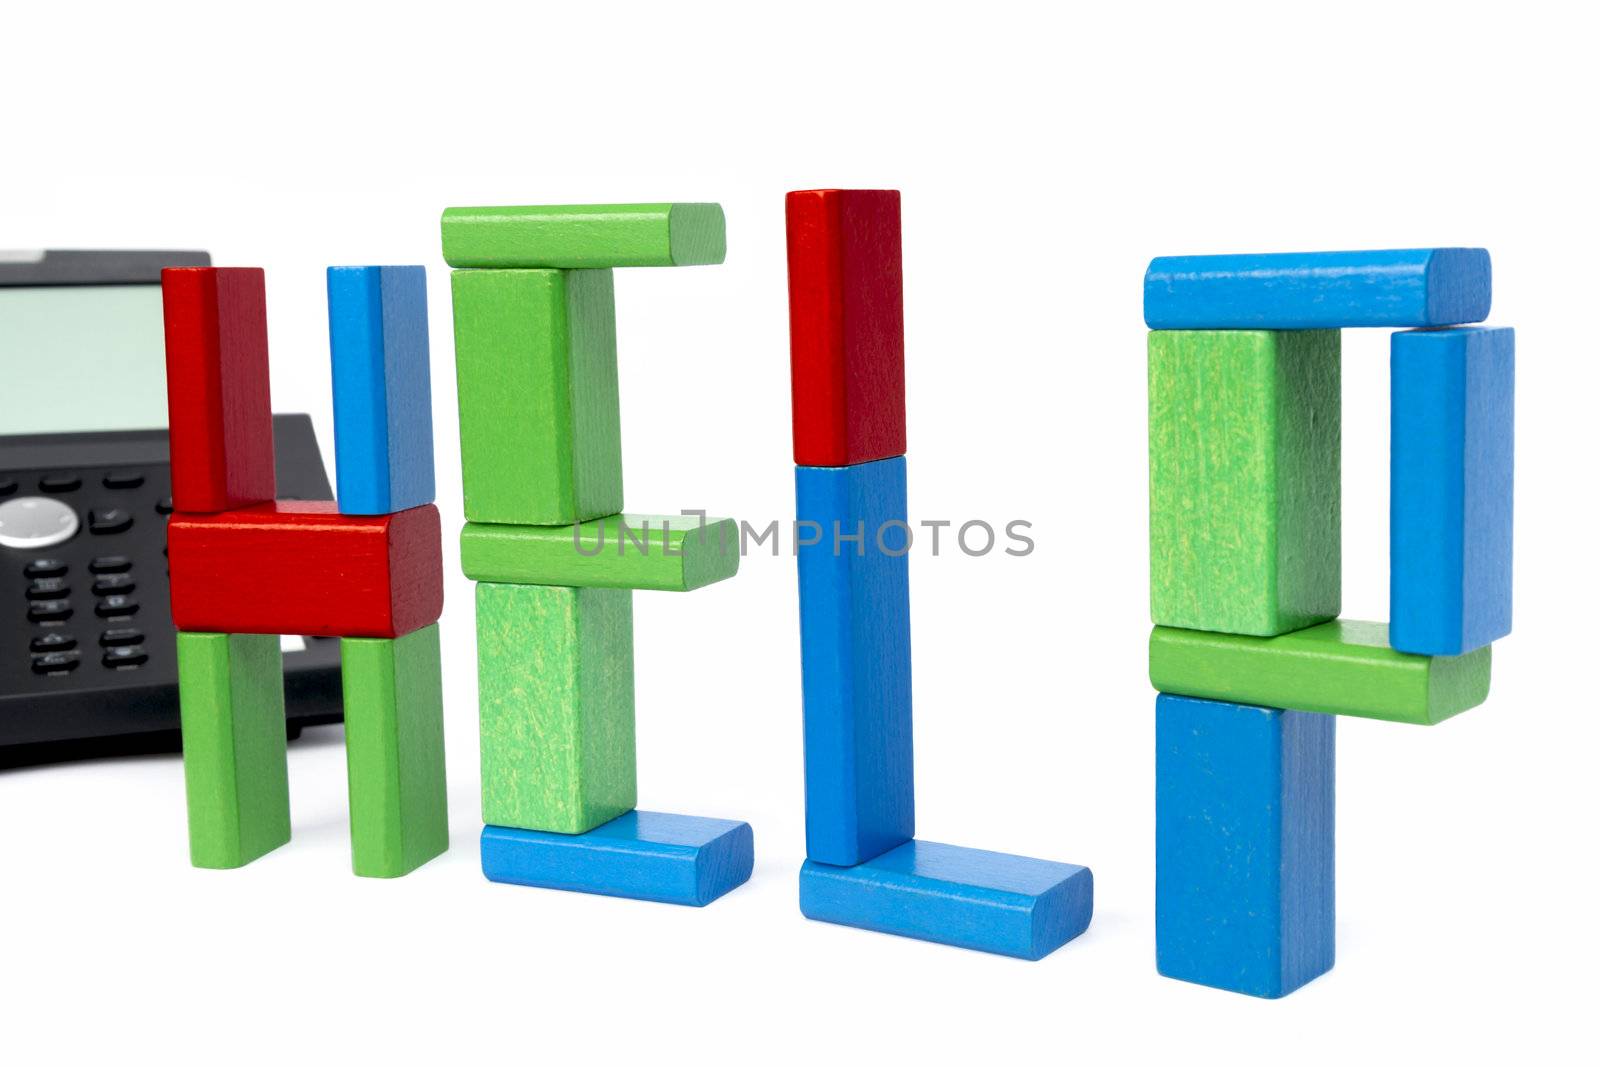 toy blocks sceaming HELP by gewoldi